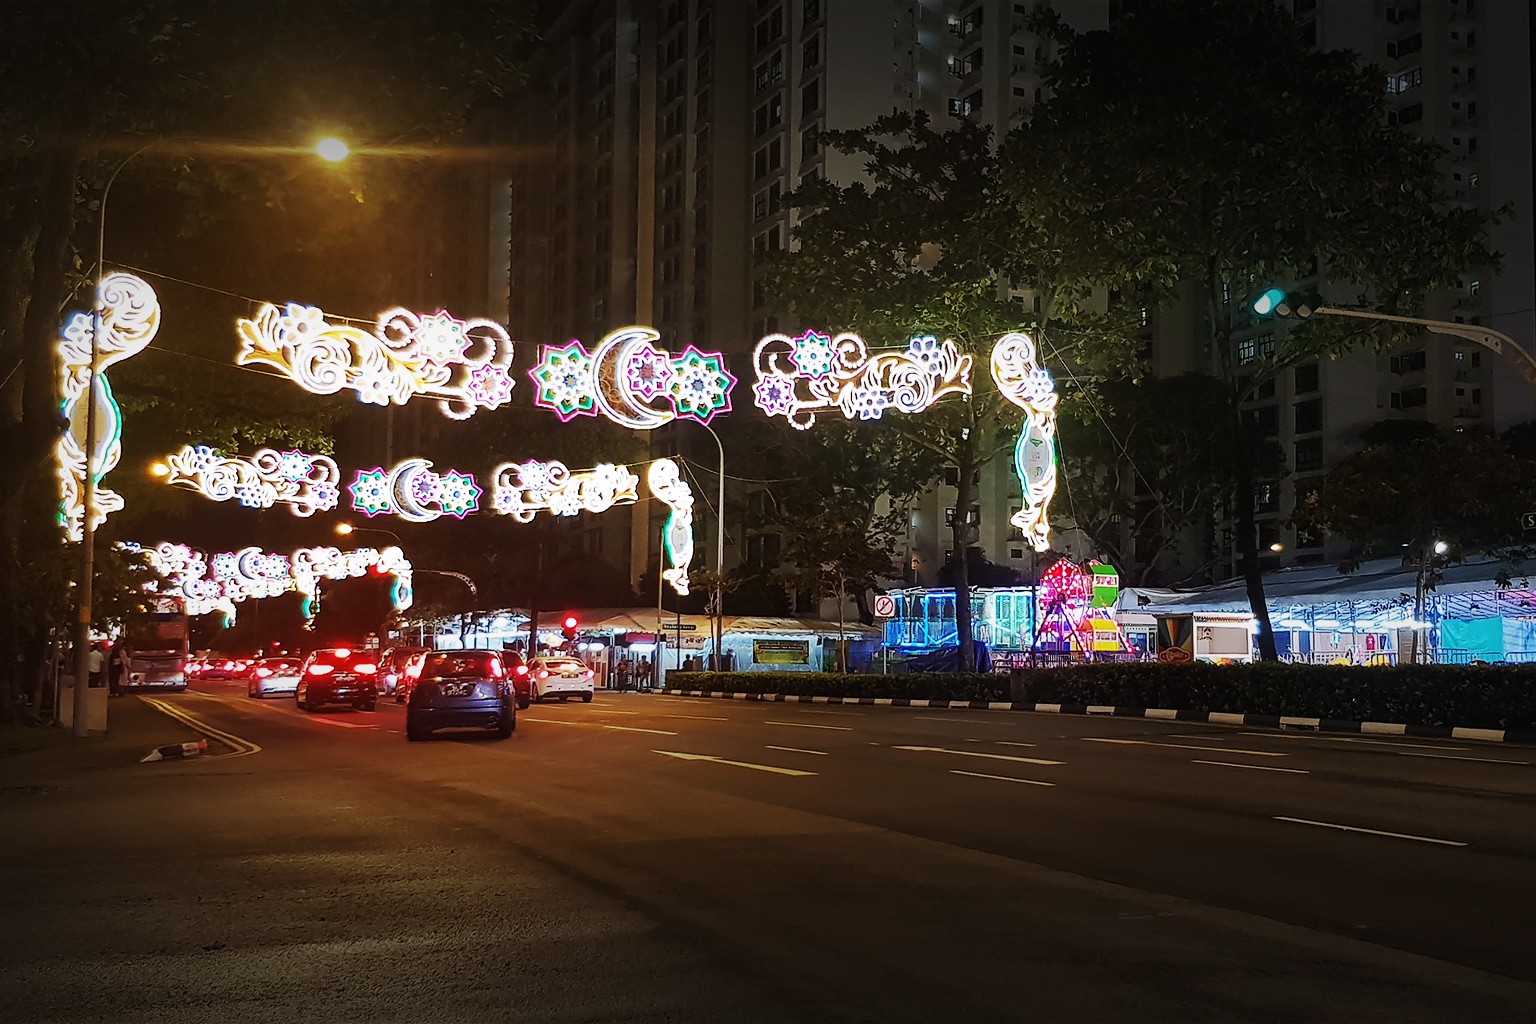 Singapore City Night Walk #2: Street Culture - Geylang